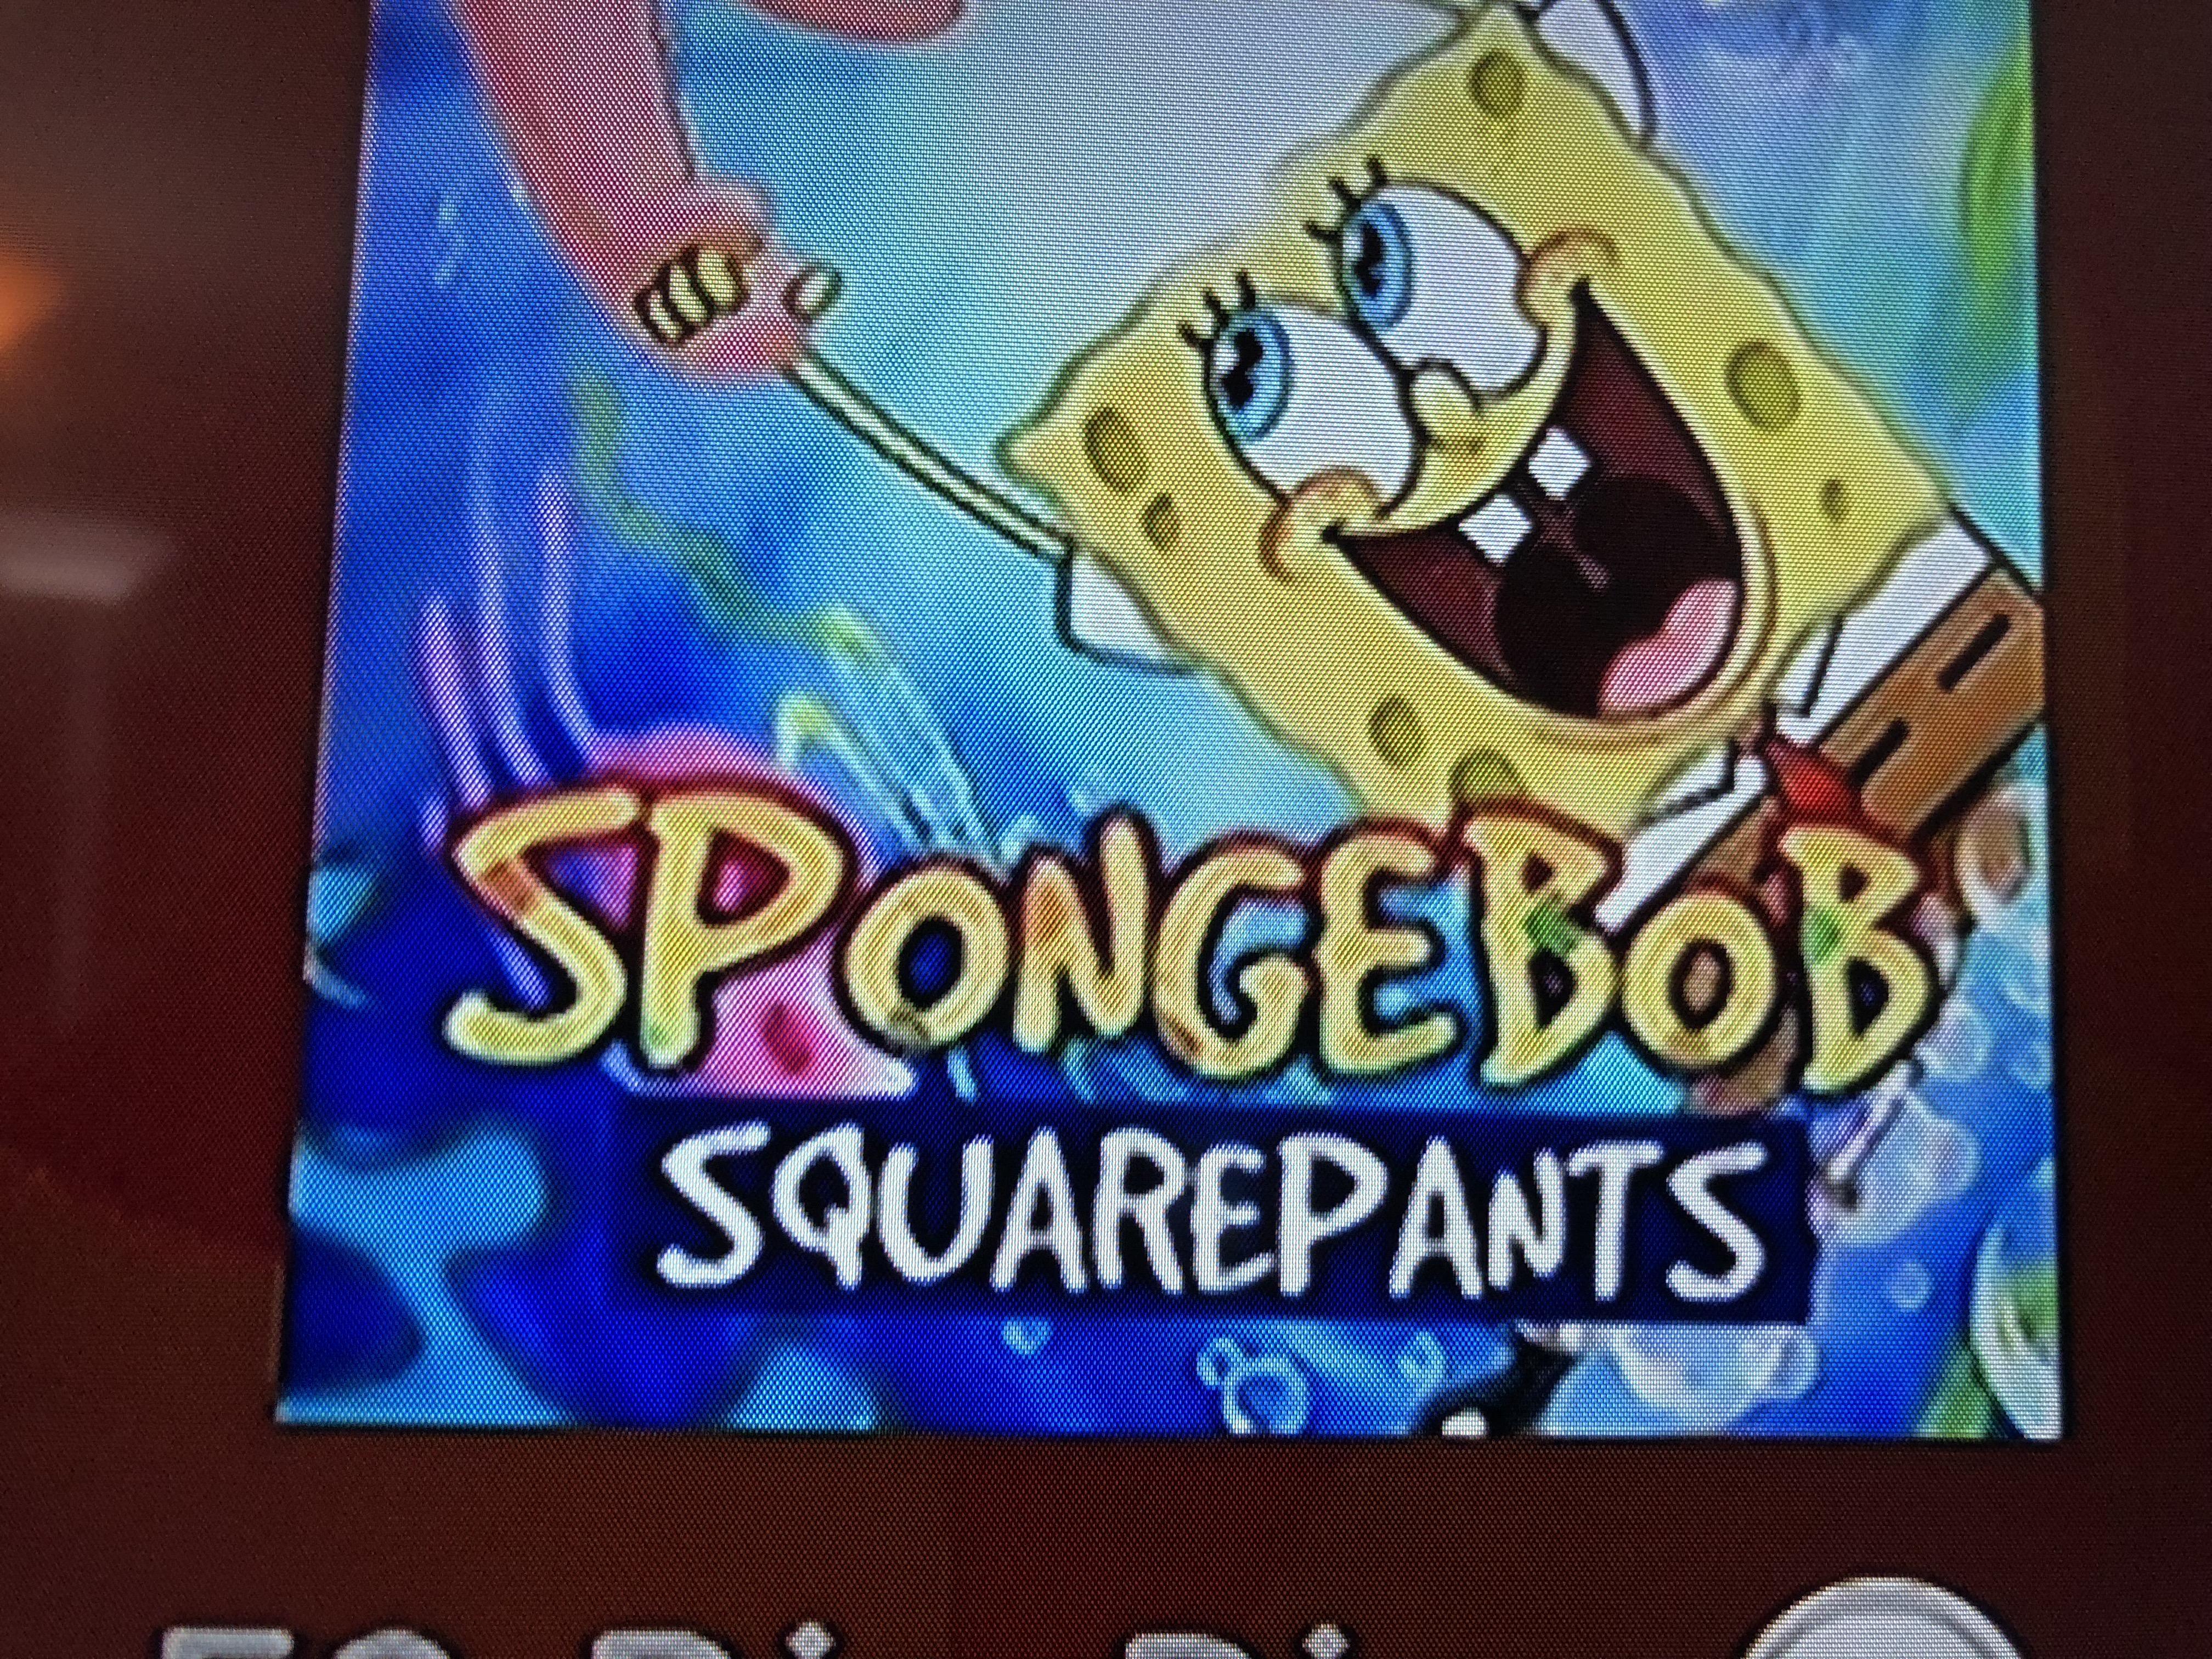 Spongebob SquarePants Logo - Did they change the spongebob squarepants logo???? : spongebob